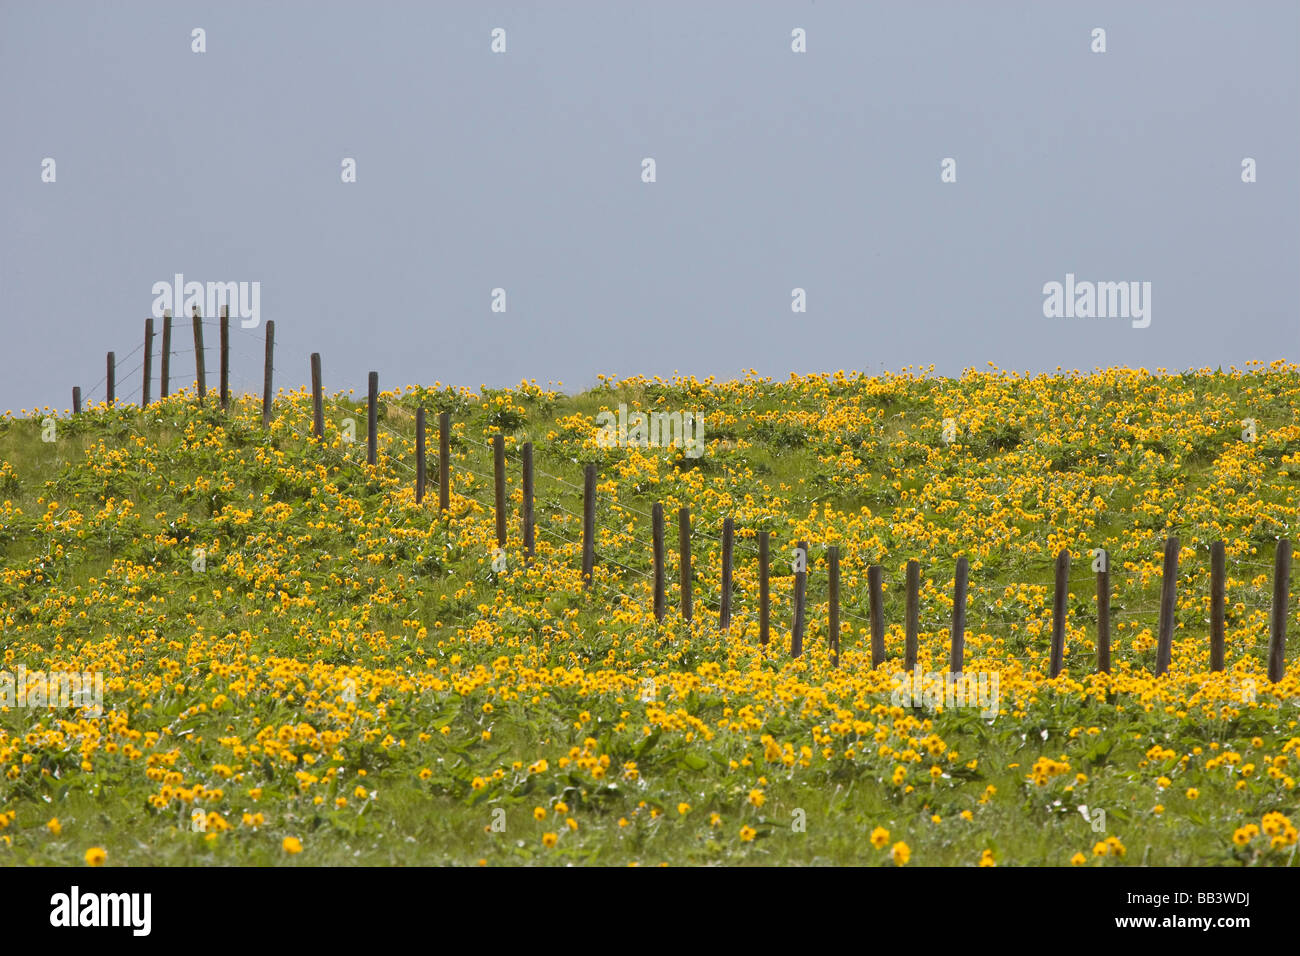 USA, Montana, Rocky Mountain Front. Balsamwurzel Wildblumen wachsen im Feld mit Zaun. Stockfoto